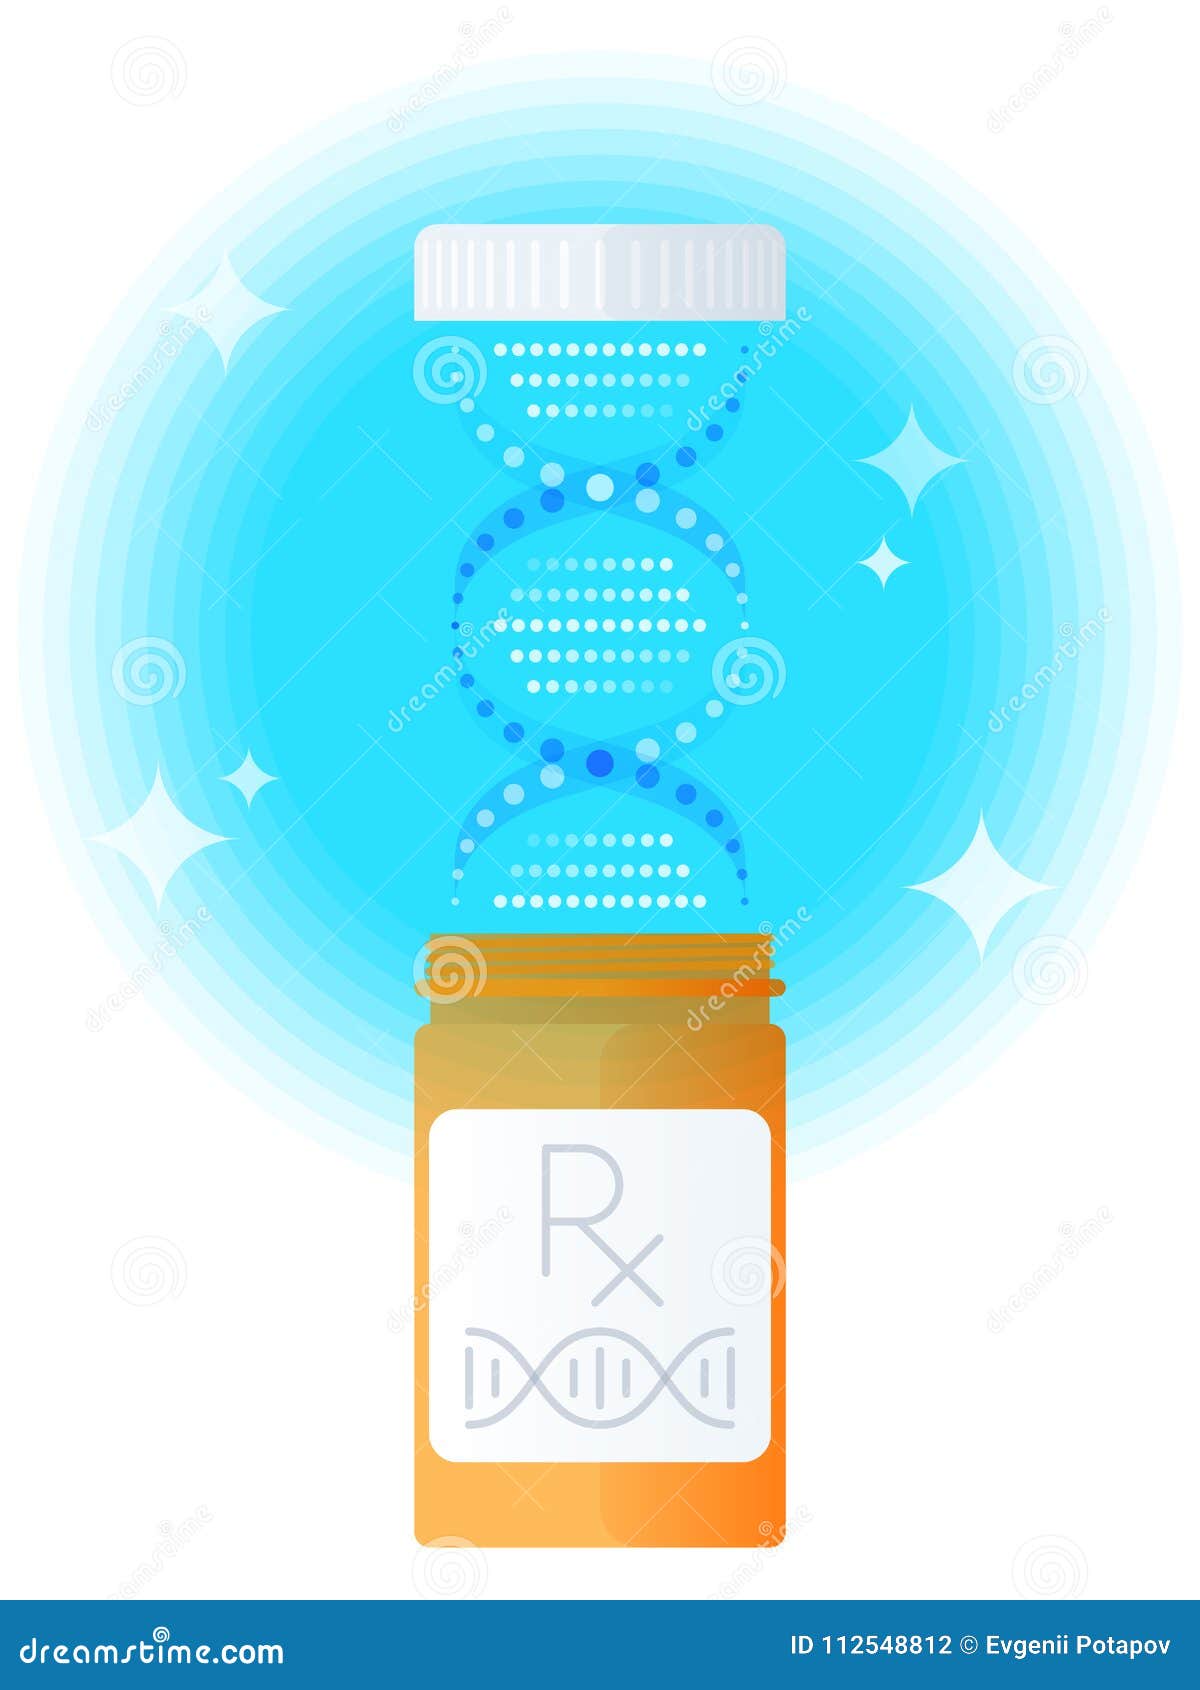 genomic personalized medicine concept.  flat  template .